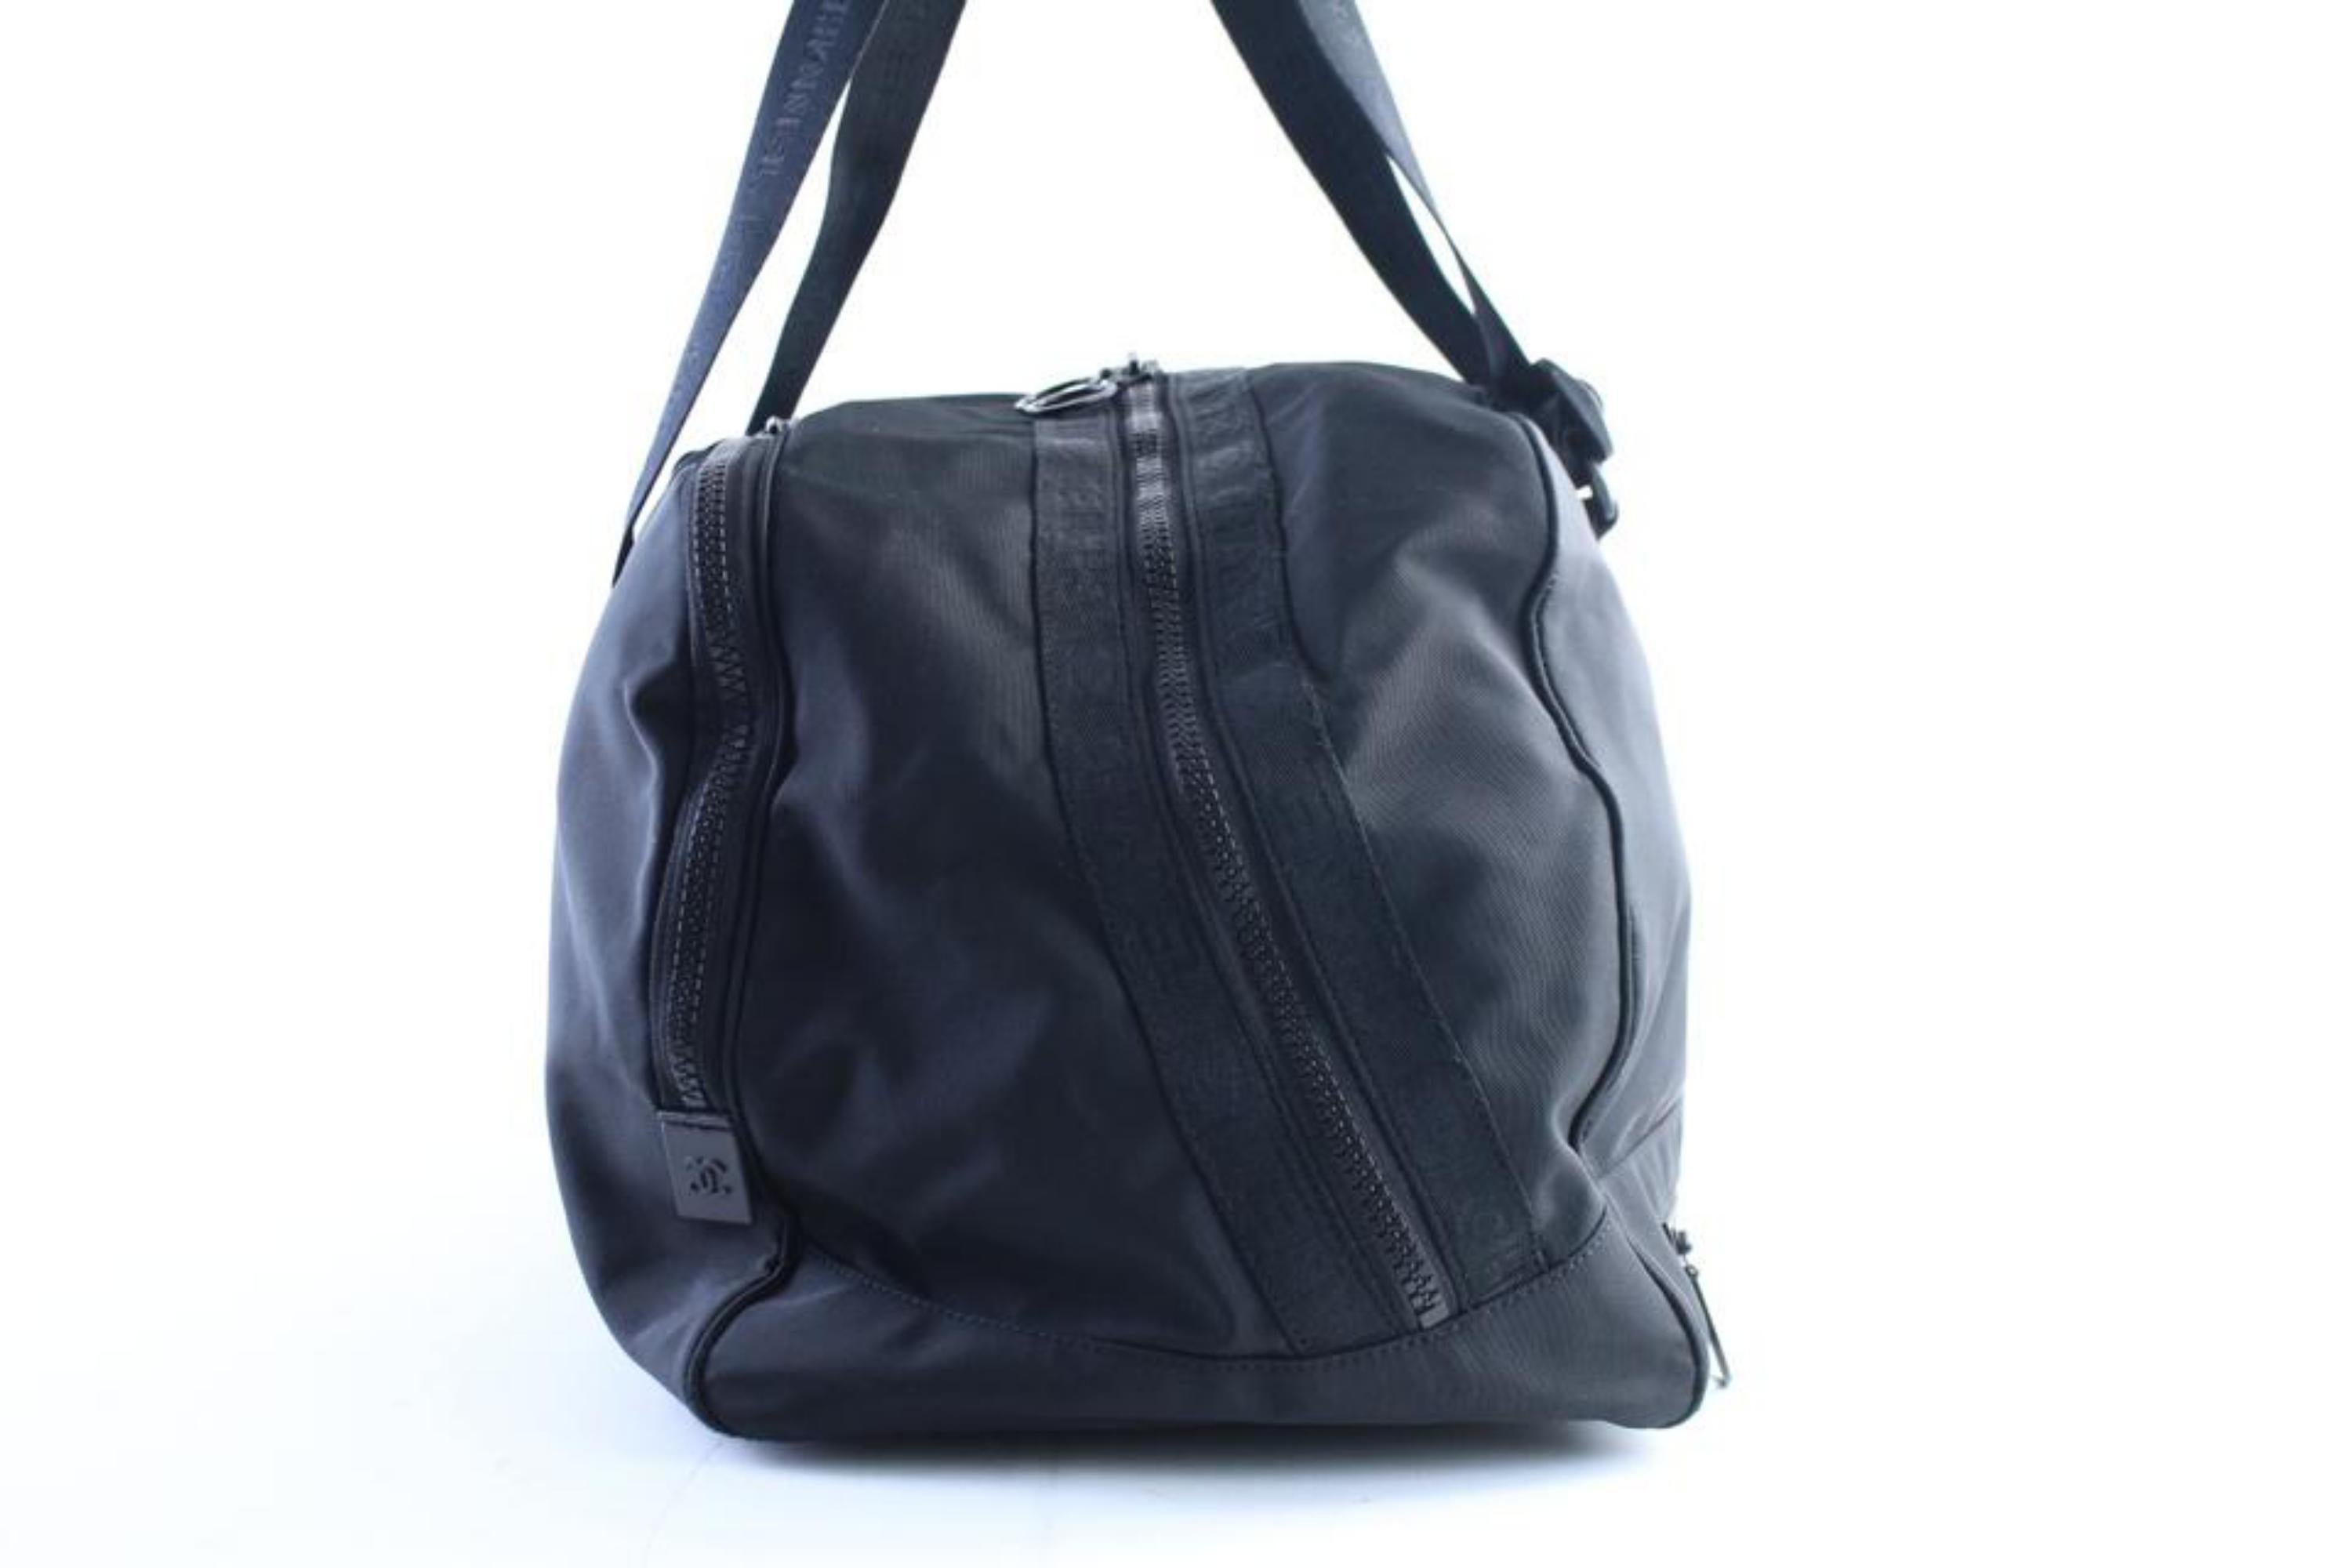 Chanel Duffle Cc Sports Boston 226424 Black Canvas Weekend/Travel Bag For Sale 7